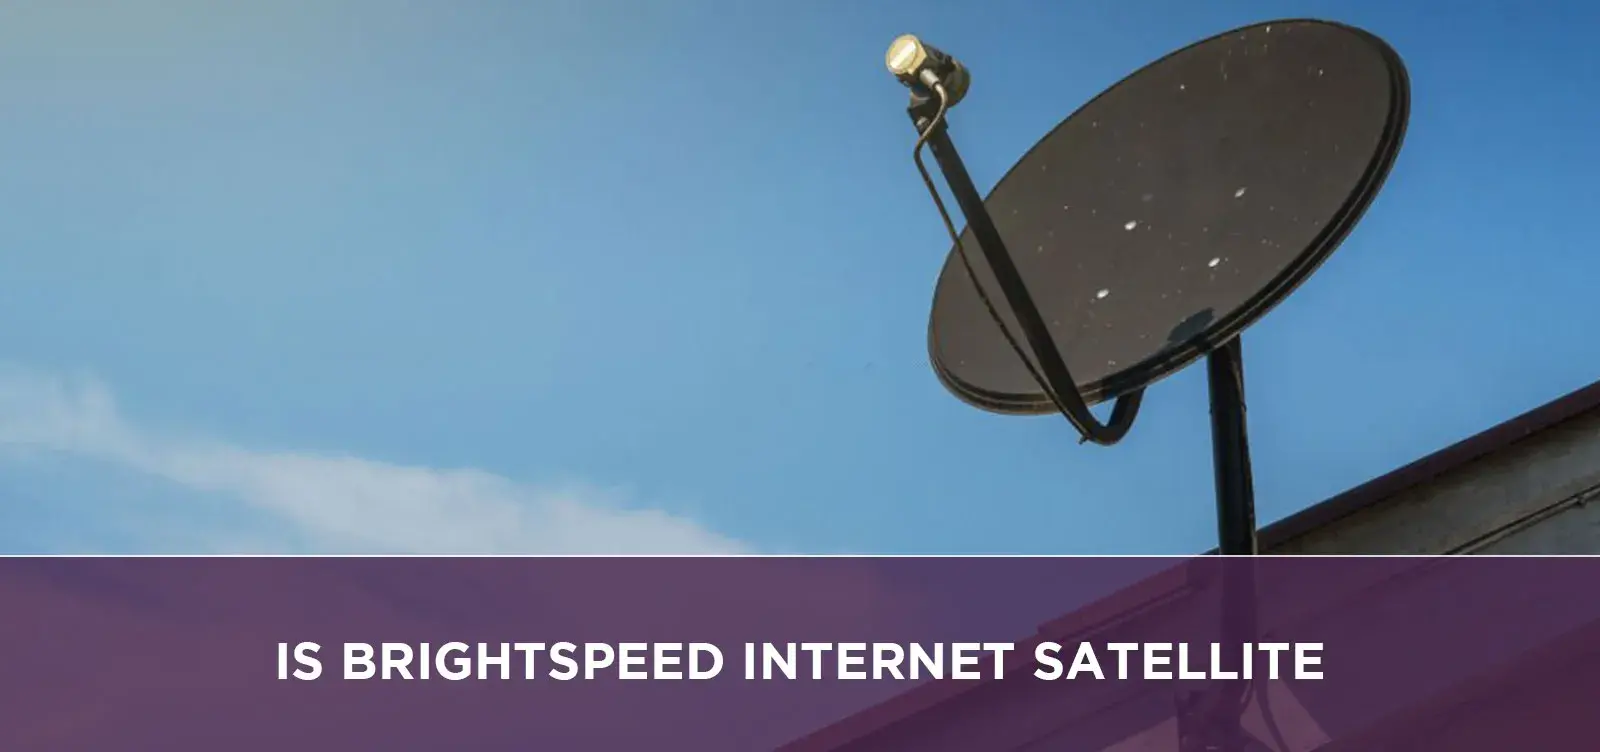 Is Brightspeed Internet Satellite?